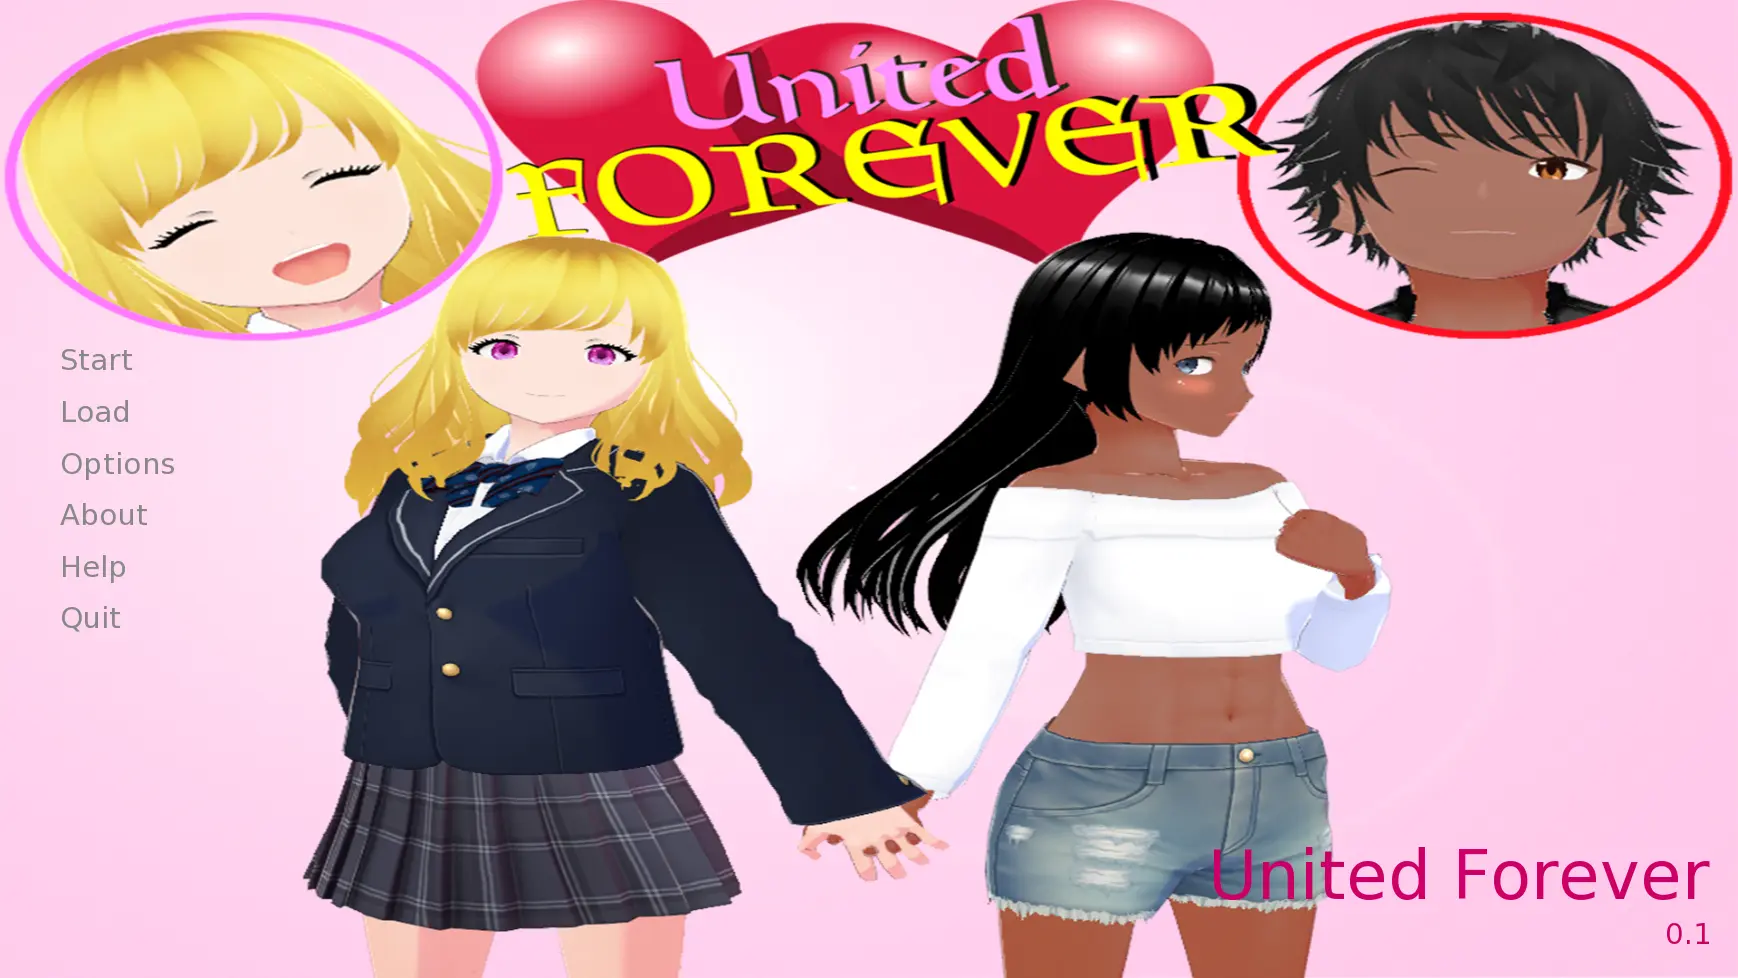 United Forever main image